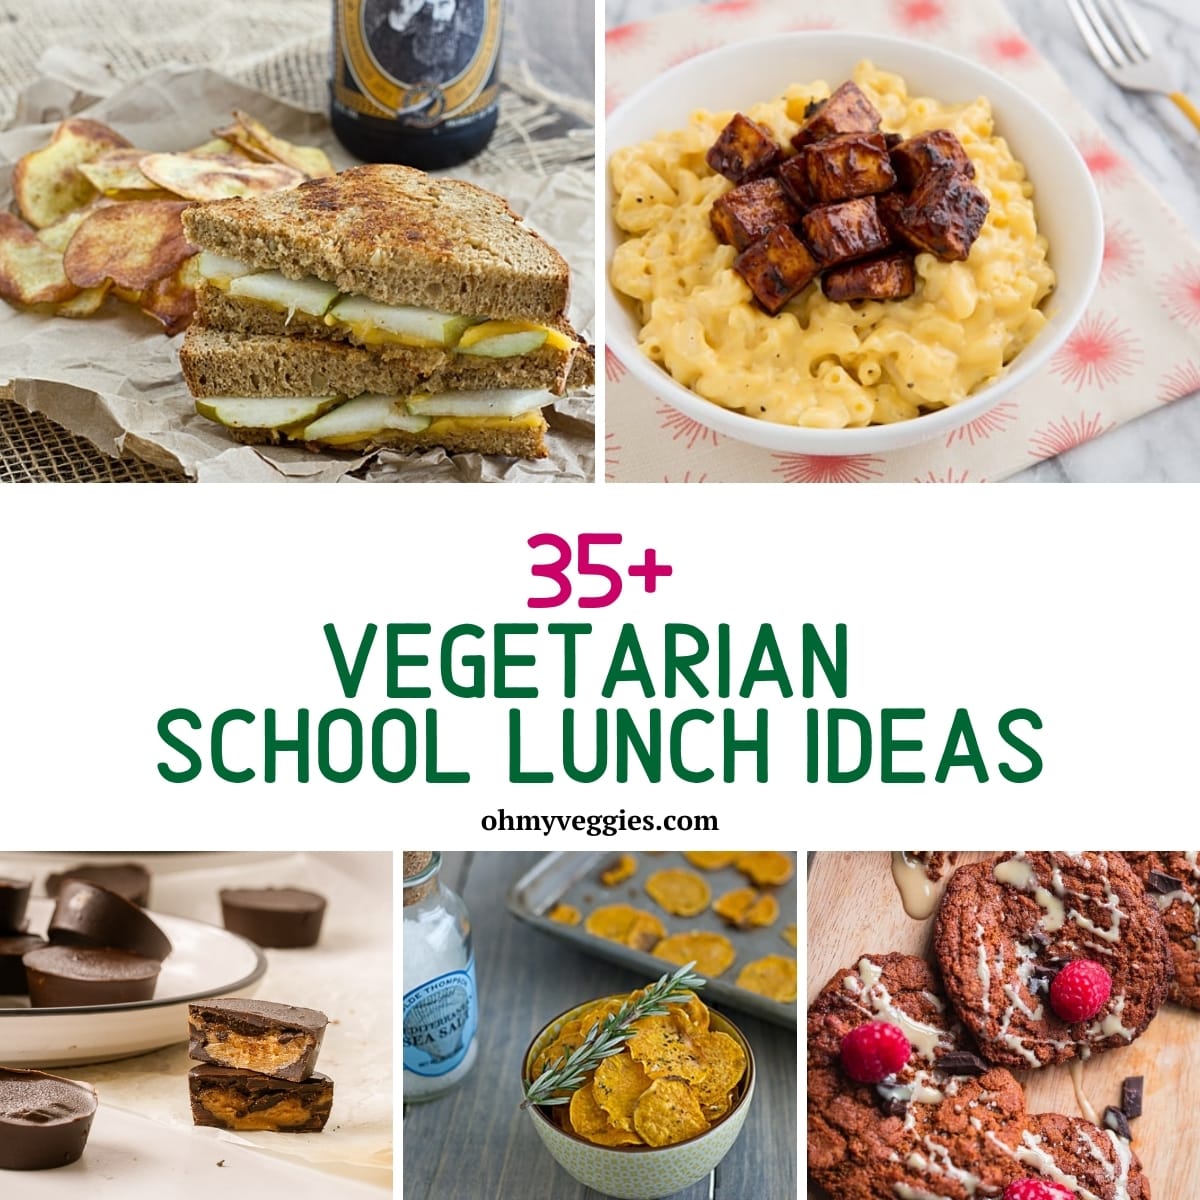 https://ohmyveggies.com/wp-content/uploads/2021/08/Vegetarian-School-Lunch-Ideas-1200px-square-.jpg